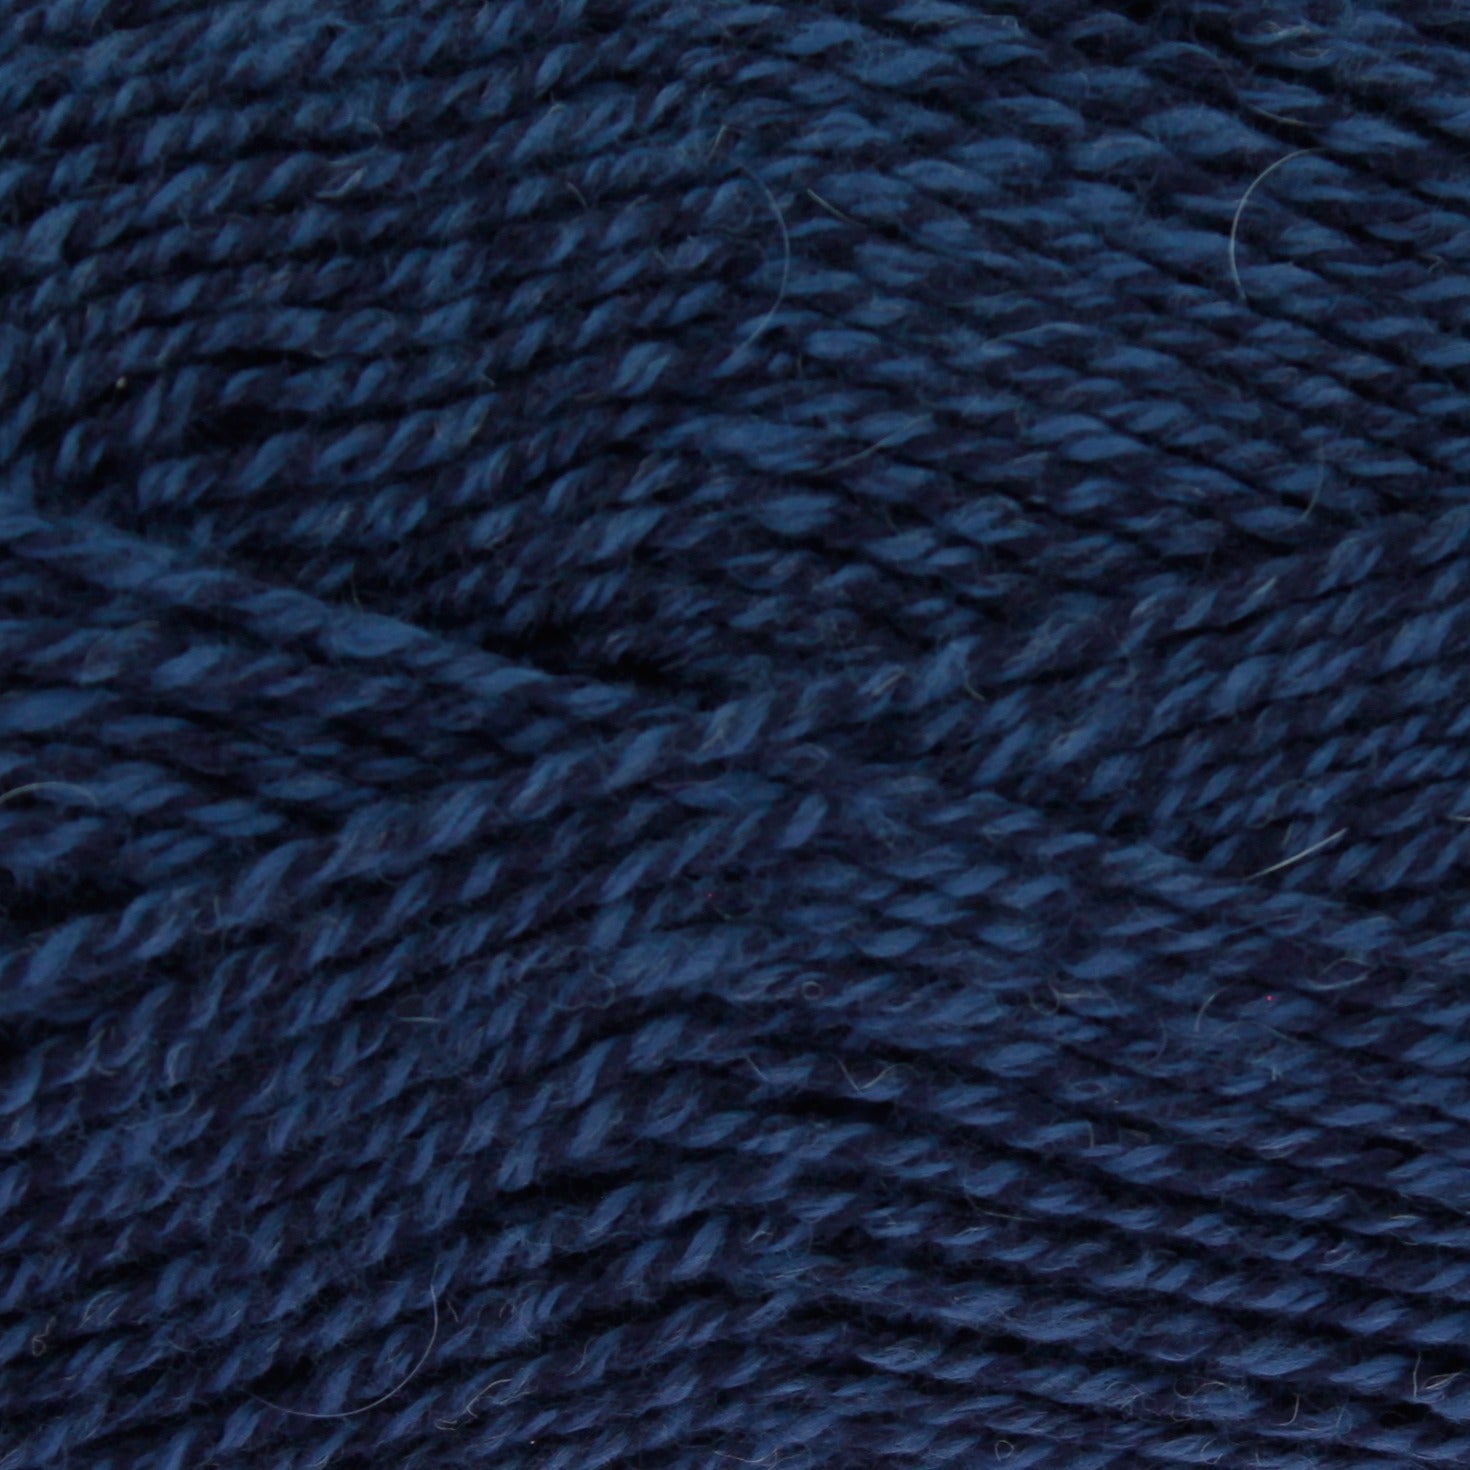 Navy blue and light blue yarn